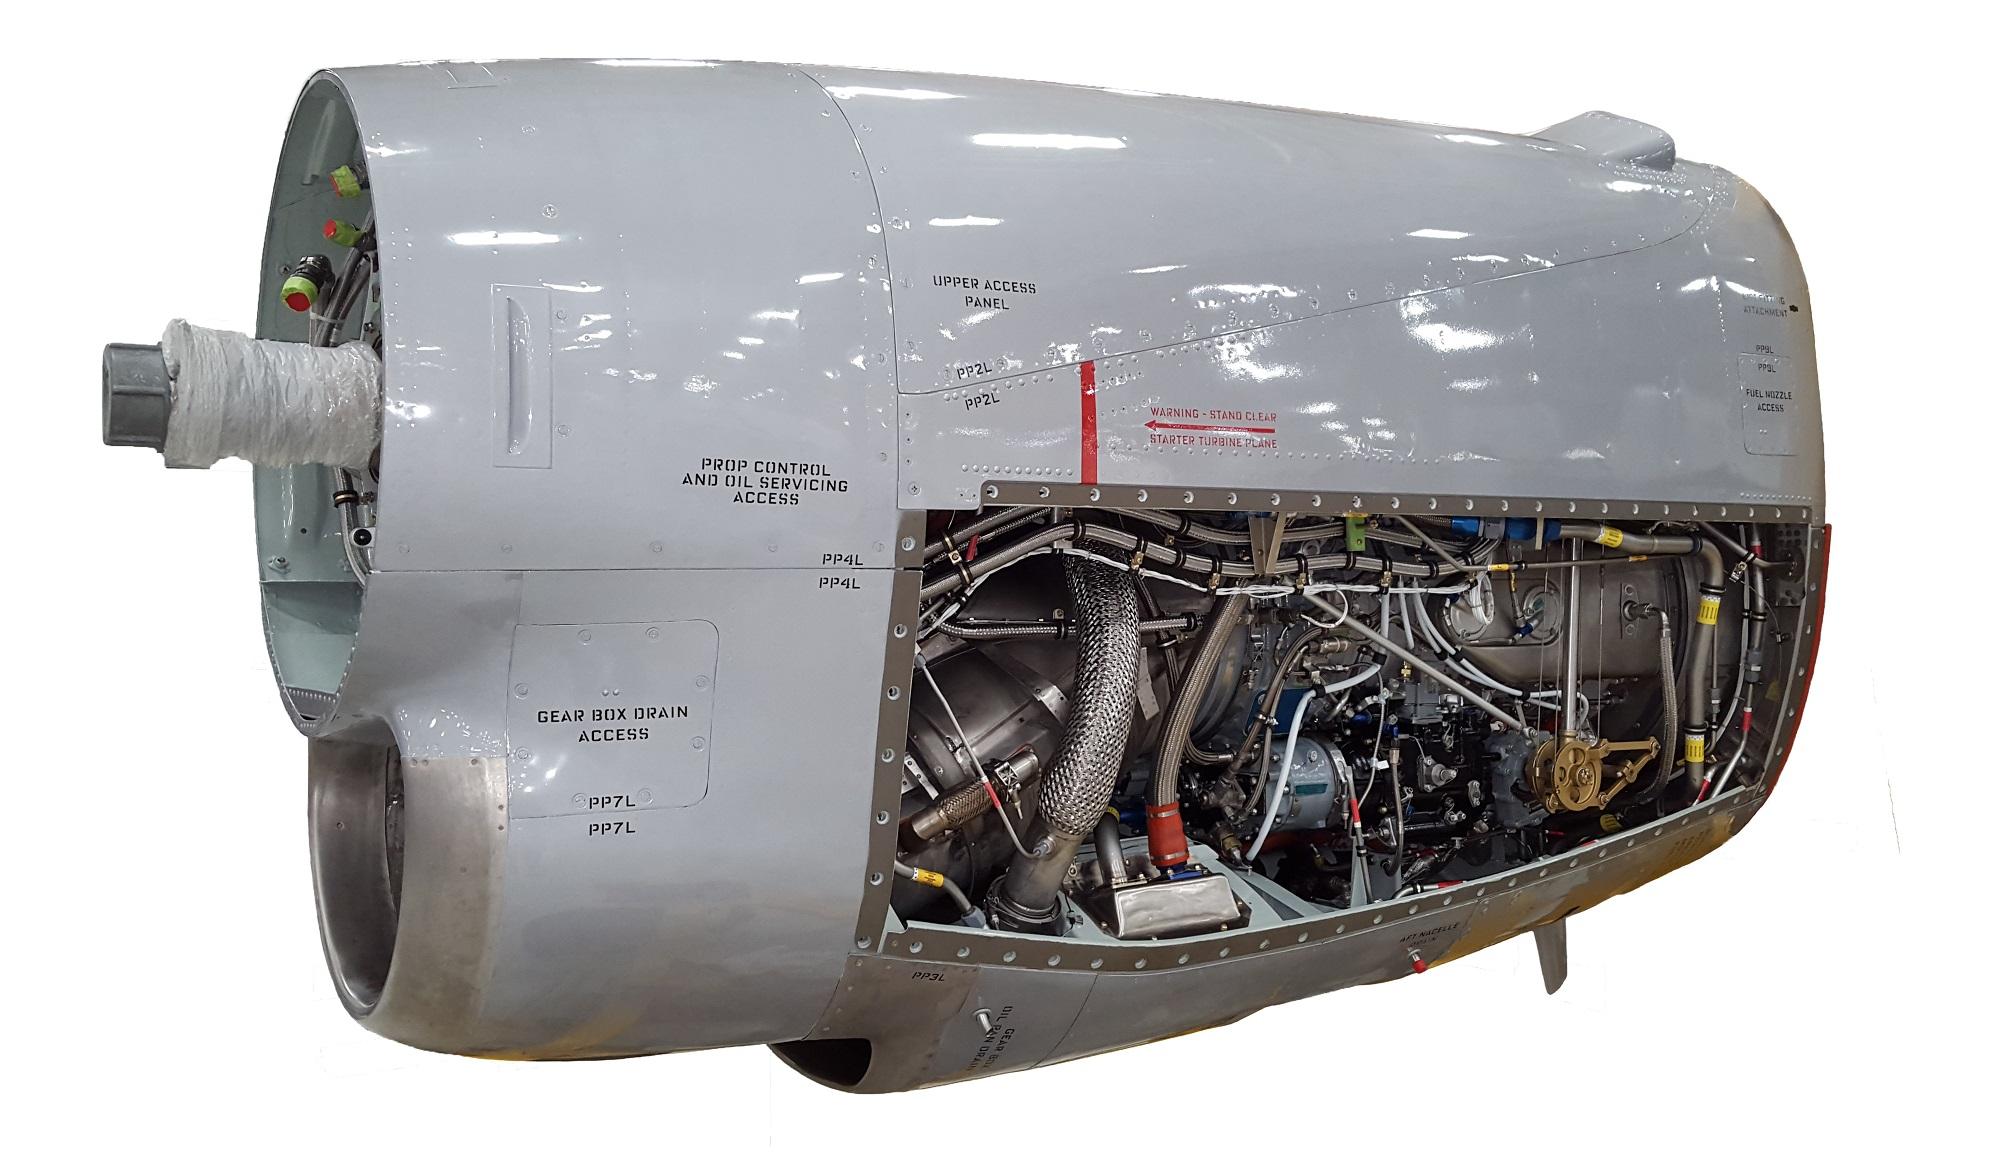 Segers Aero Awarded Contract for T-56 Engine Intermediate Level Maintenance Facility